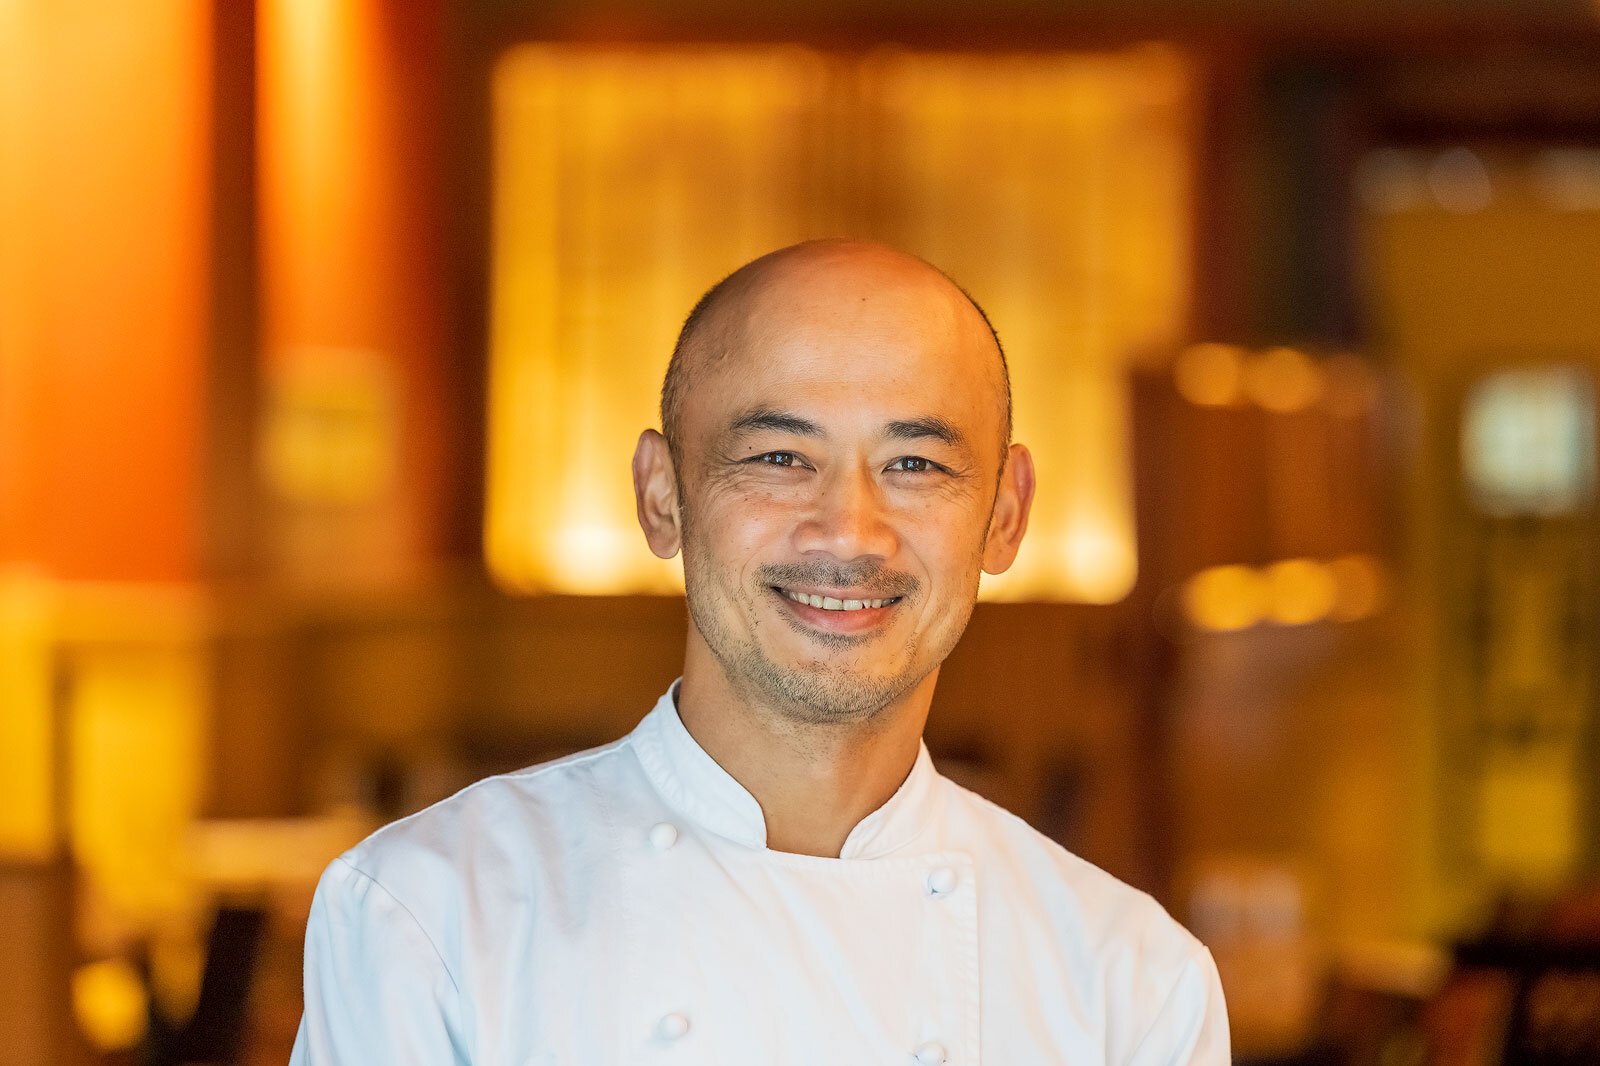 Chef Duc Tang at Pacific Rim by Kana.